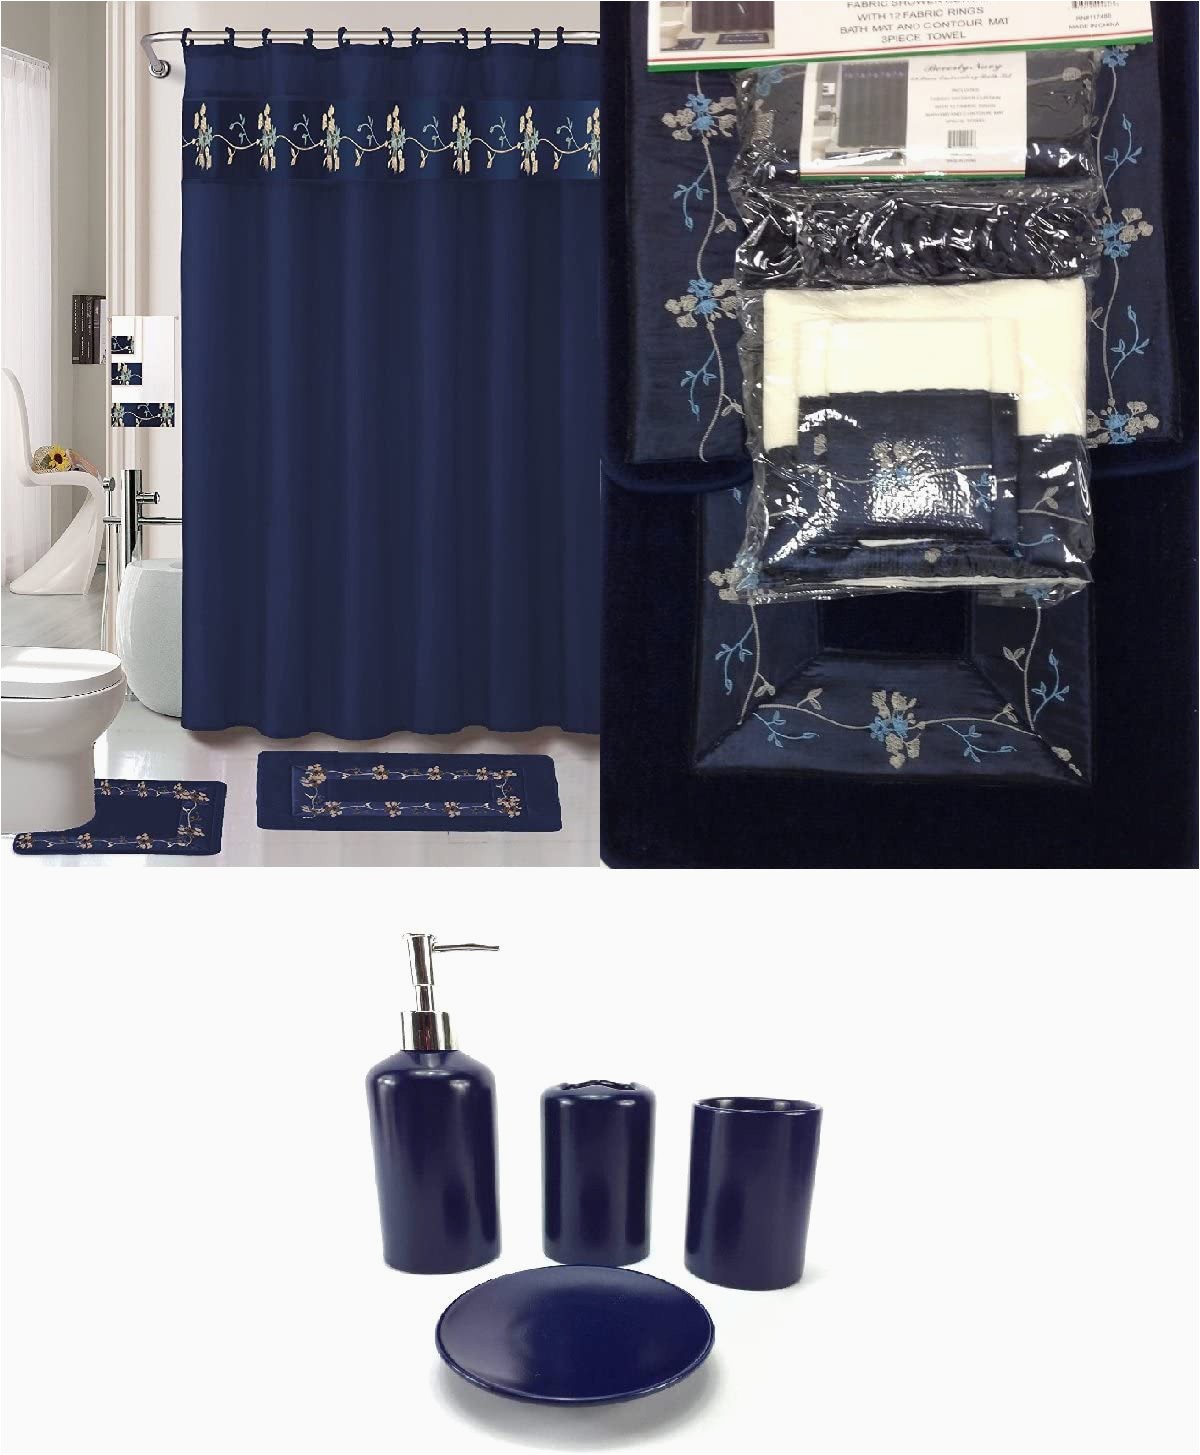 Large Blue Bathroom Rug 22 Piece Bath Accessory Set Navy Blue Flower Bathroom Rug Set Shower Curtain & Accessories